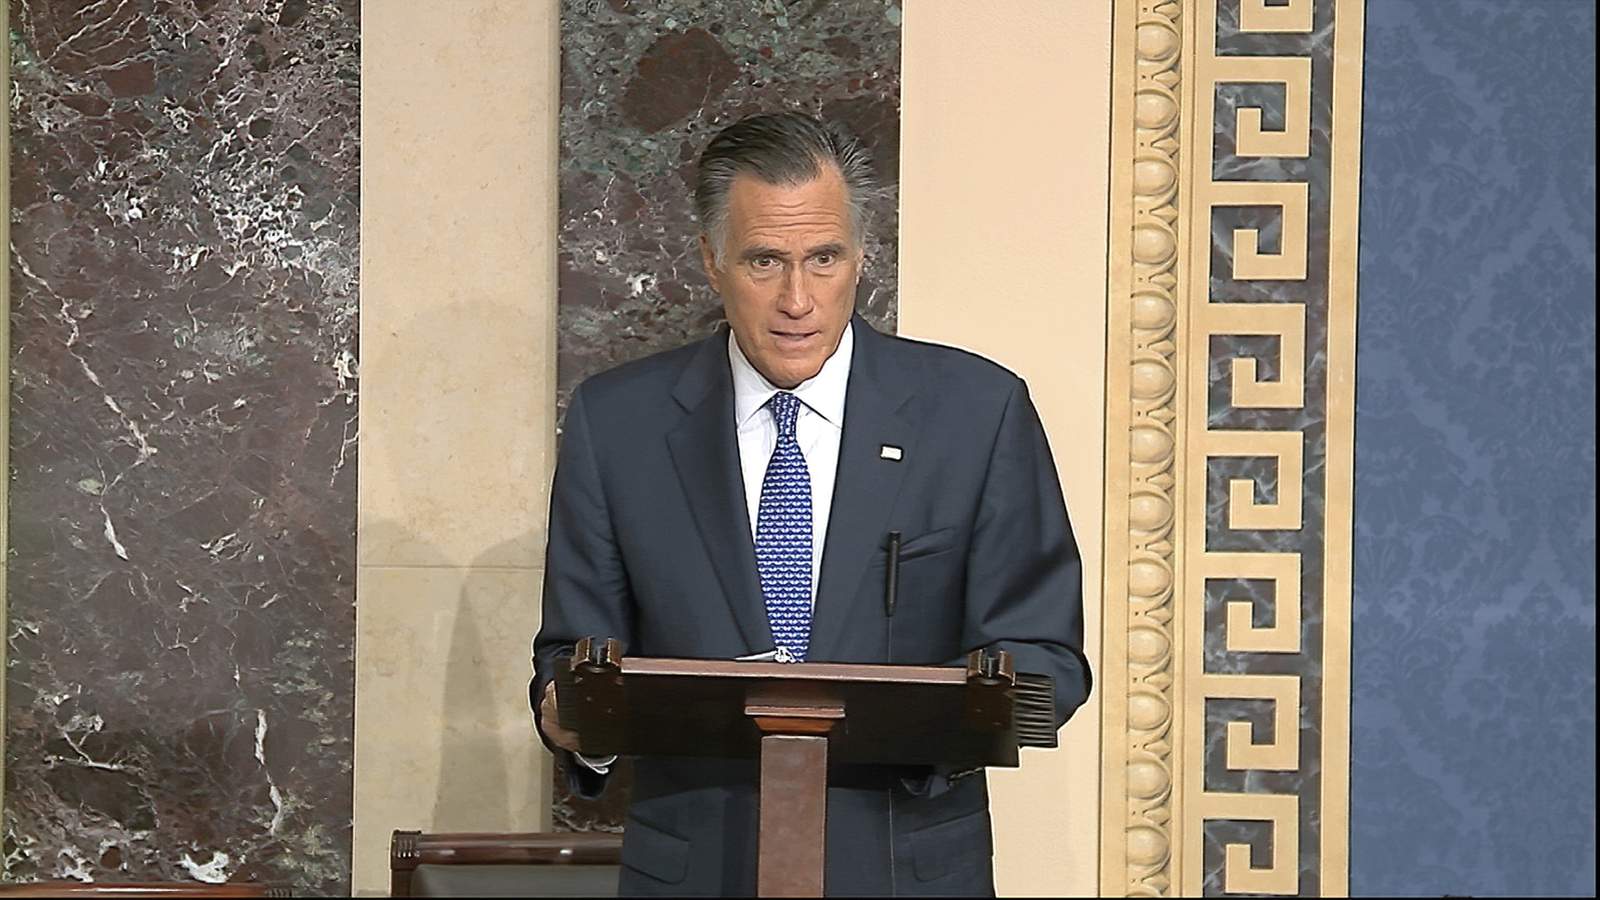 Sen. Mitt Romney breaks with GOP, votes to convict Trump